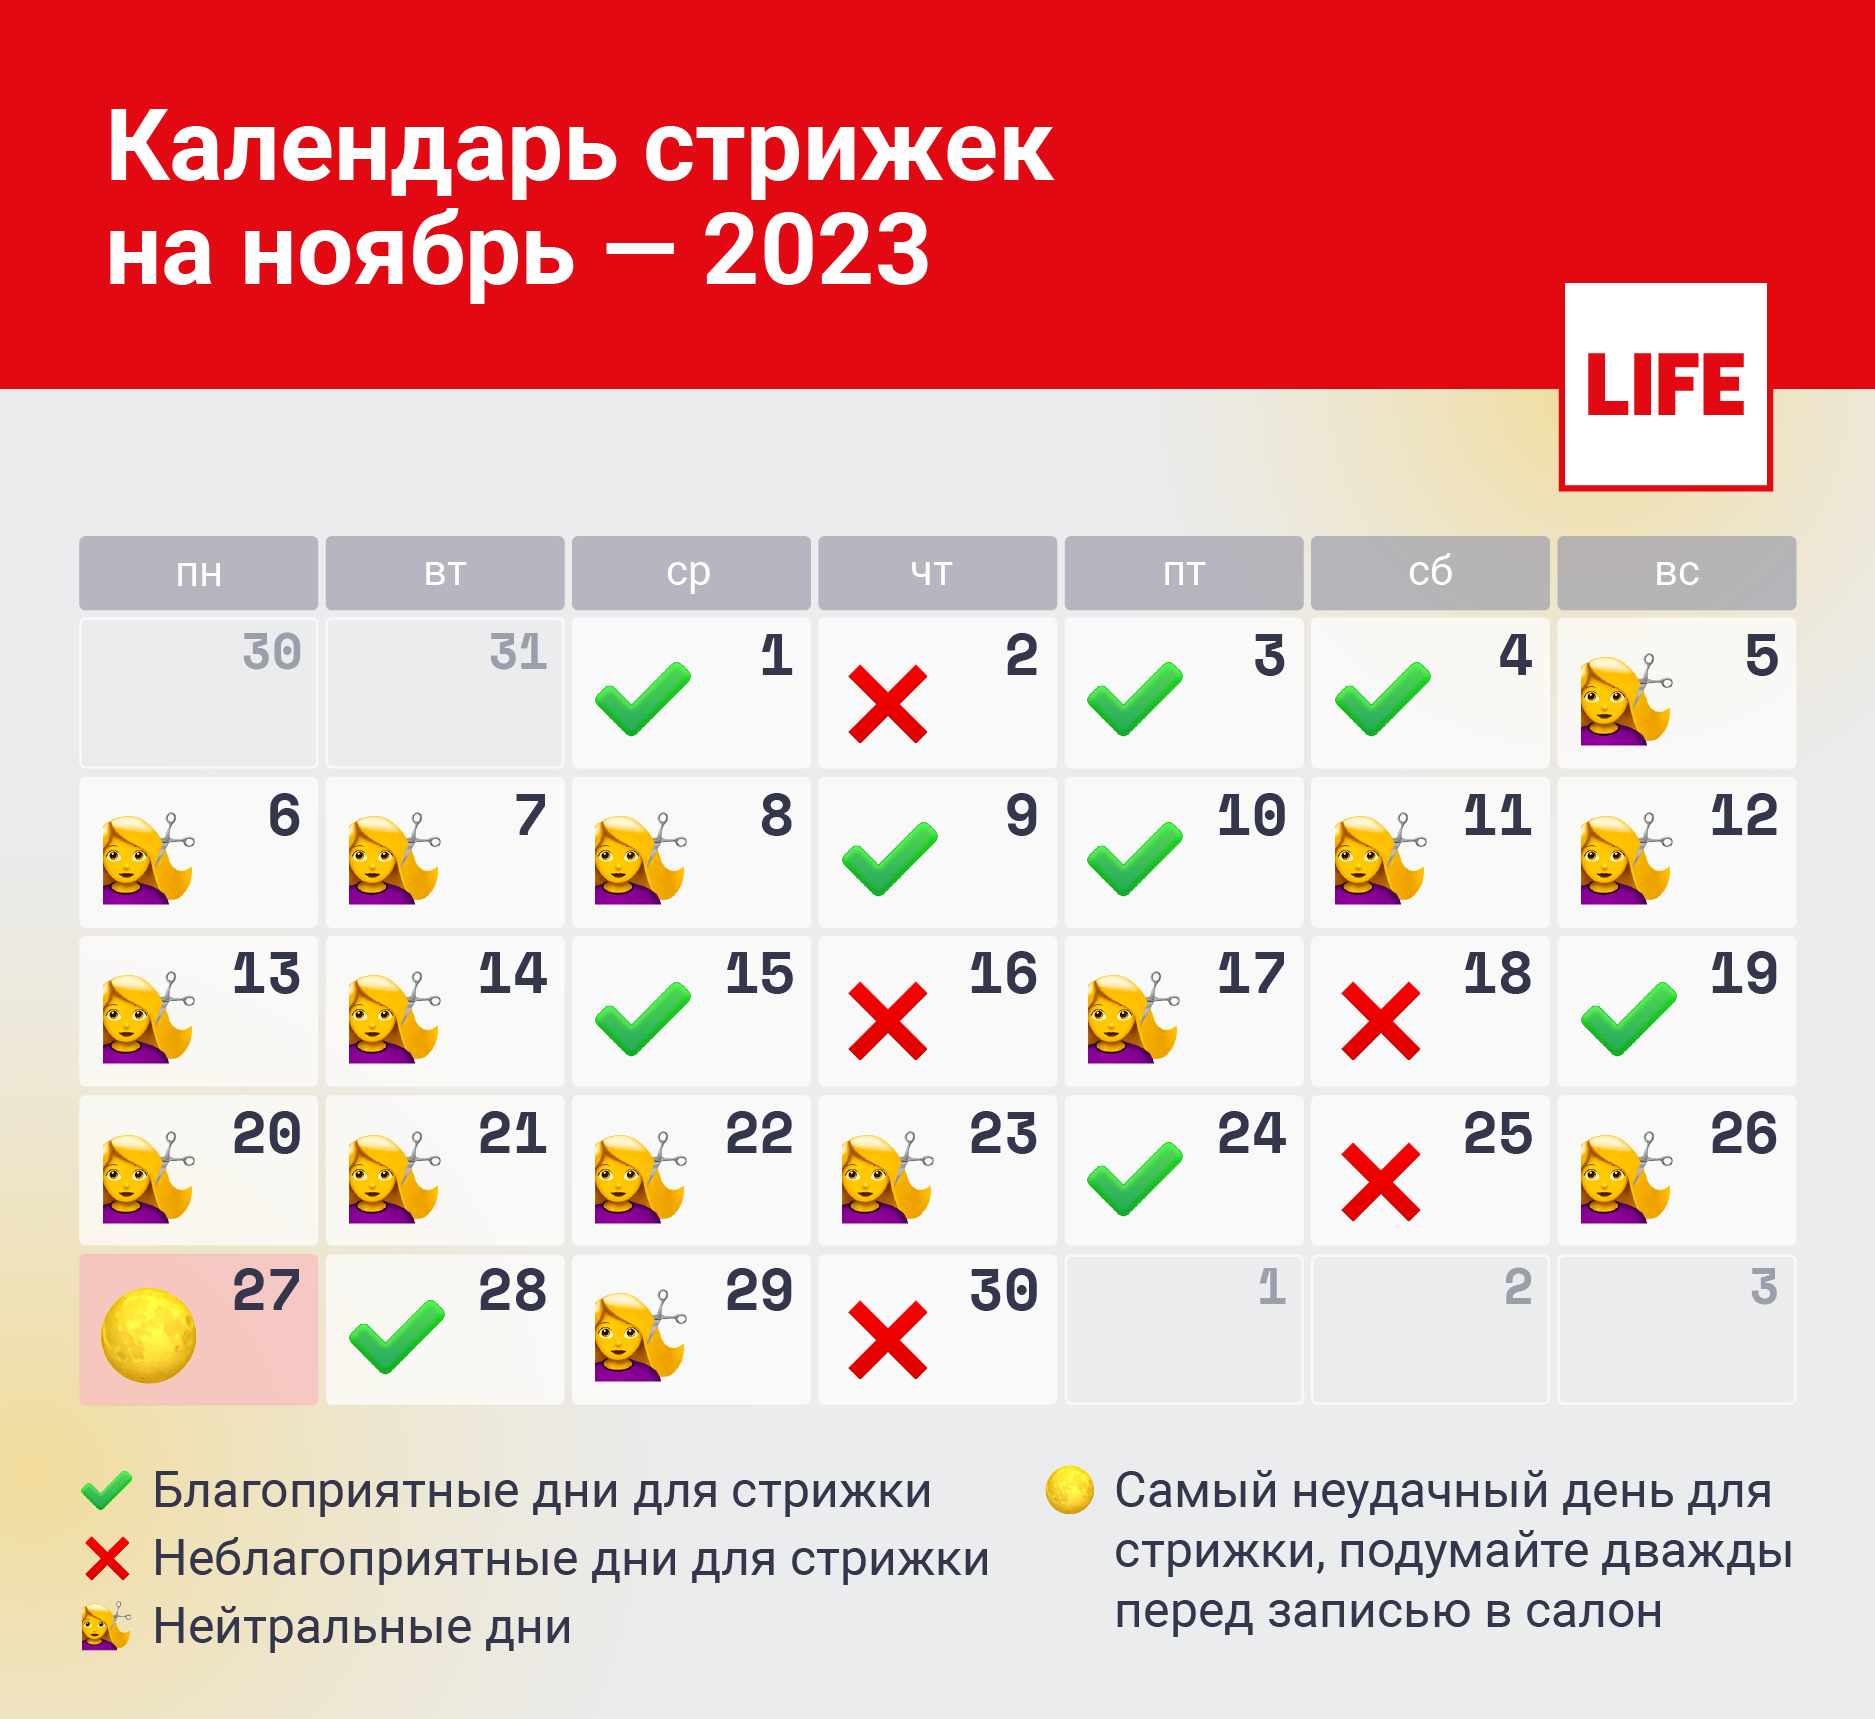 Календарь стрижек 2023 года. Инфографика © LIFE